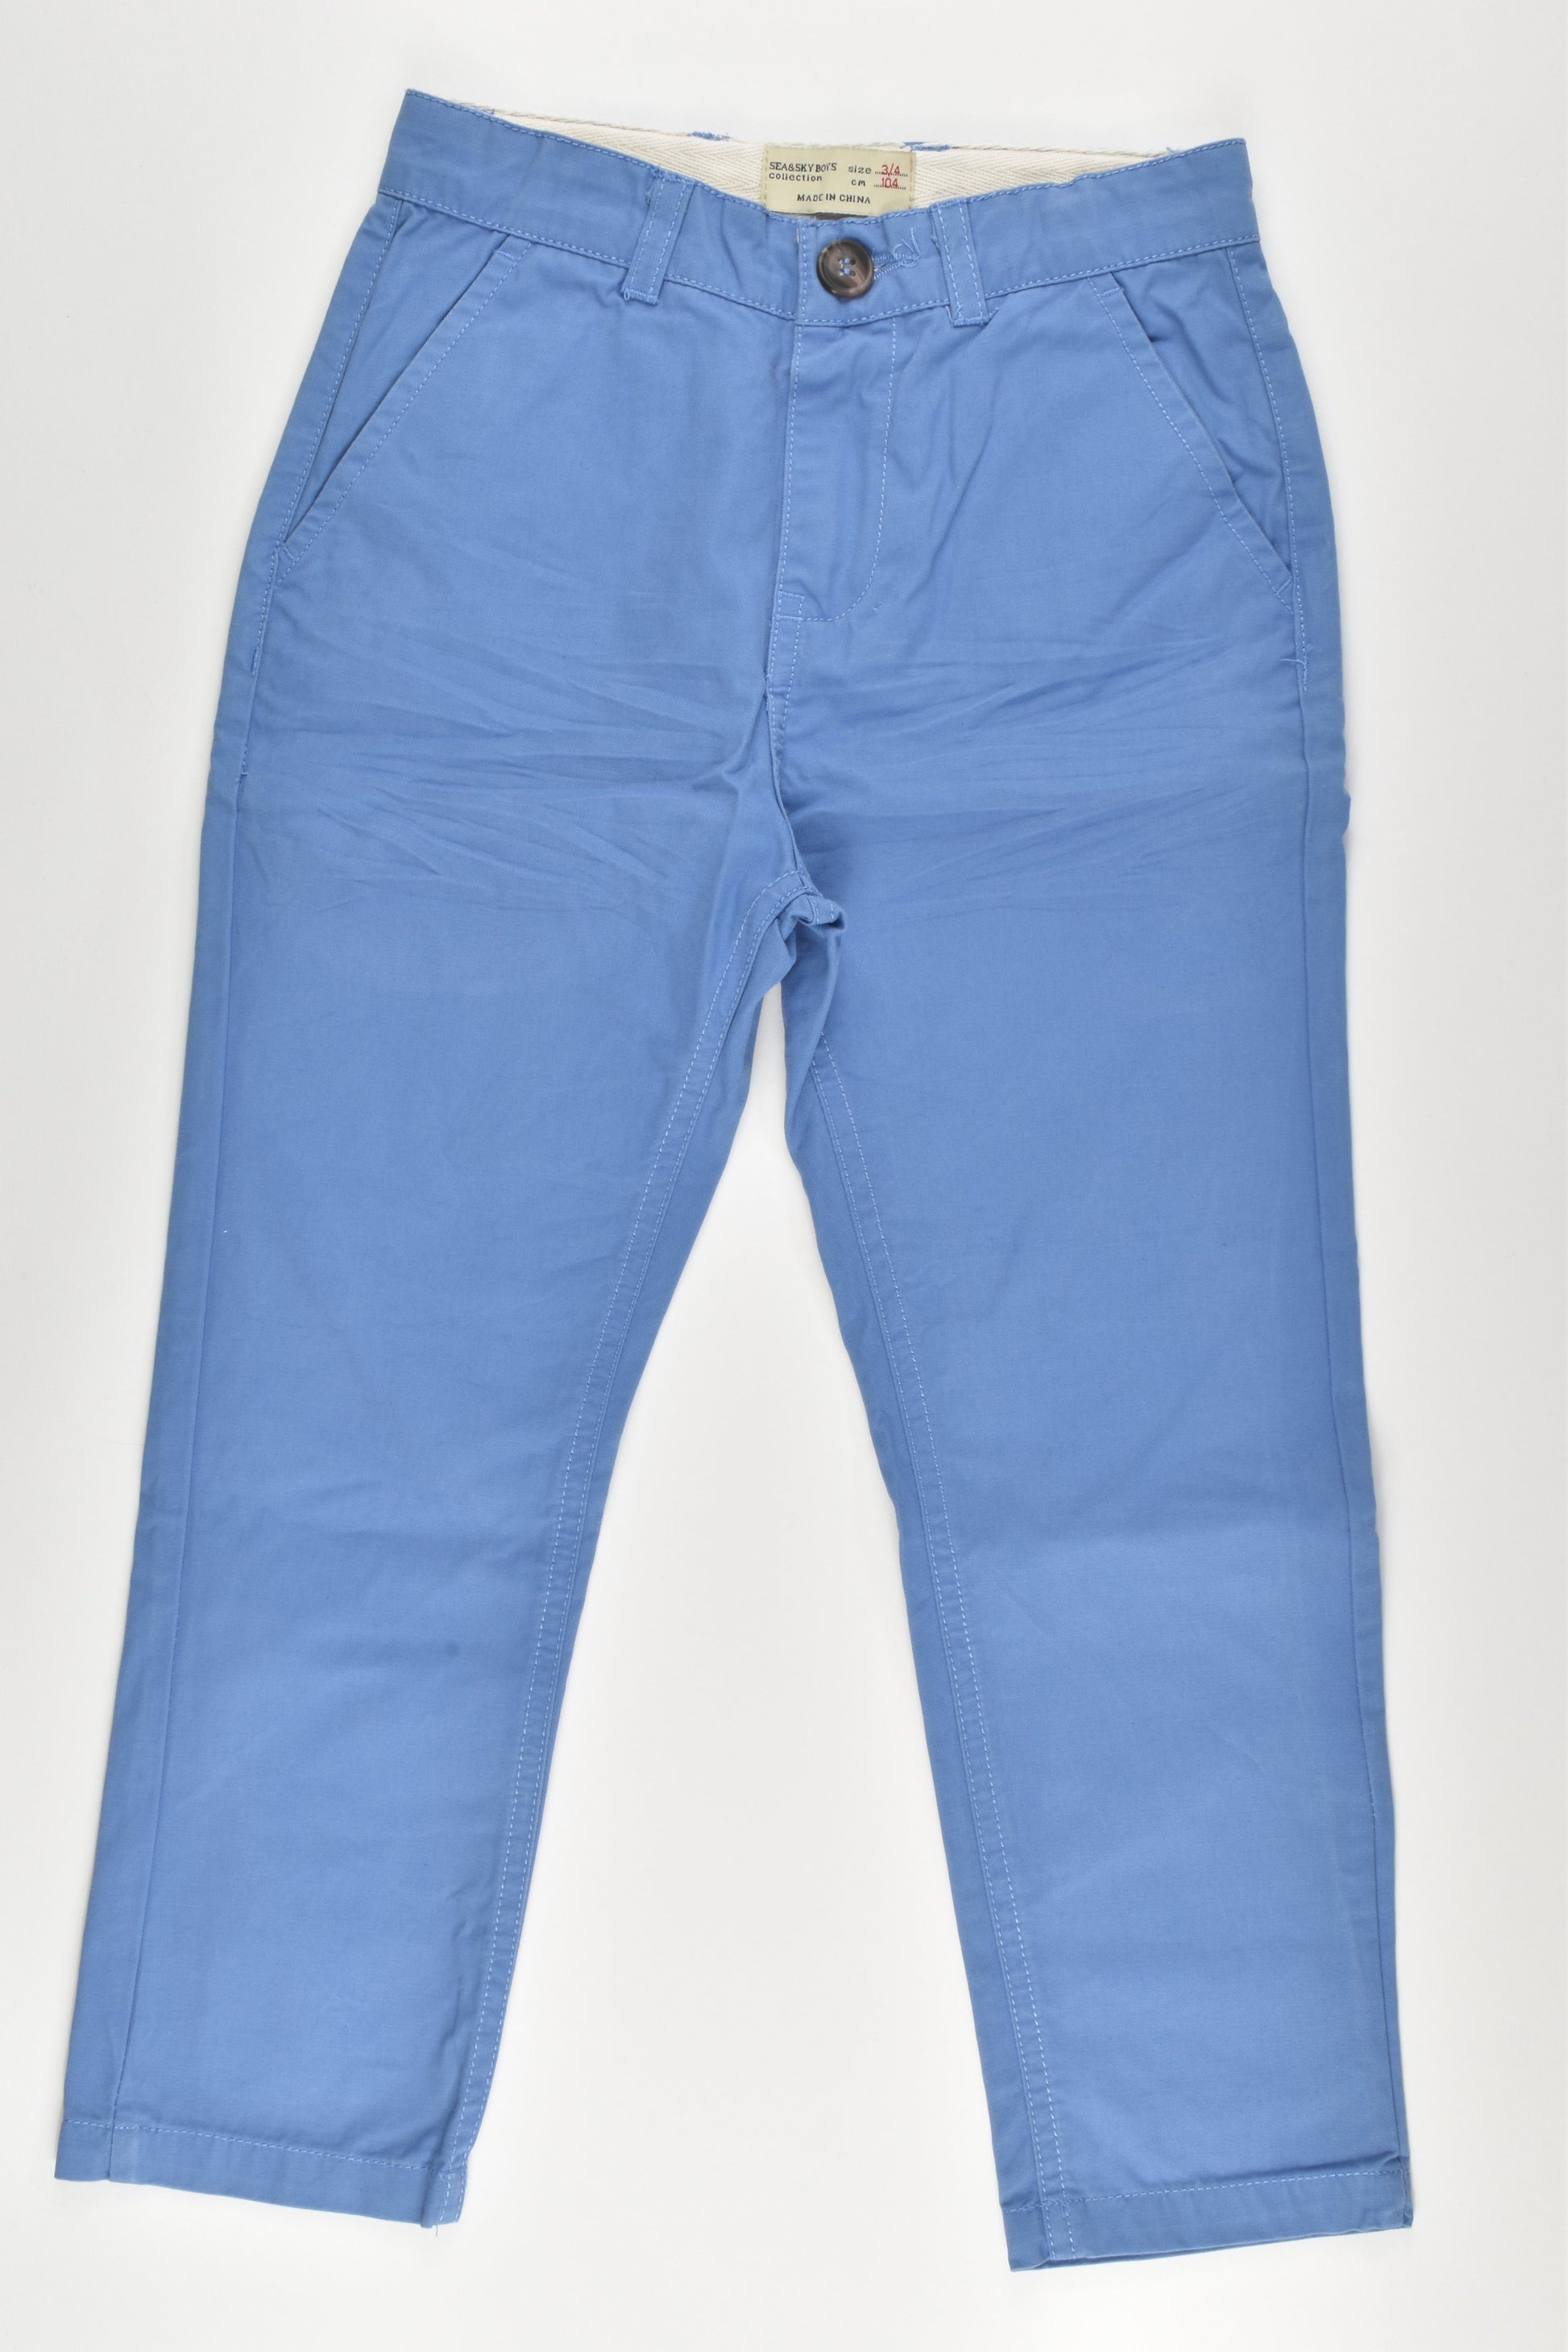 Zara Sea & Sky Collection Size 3/4 (104 cm) Pants